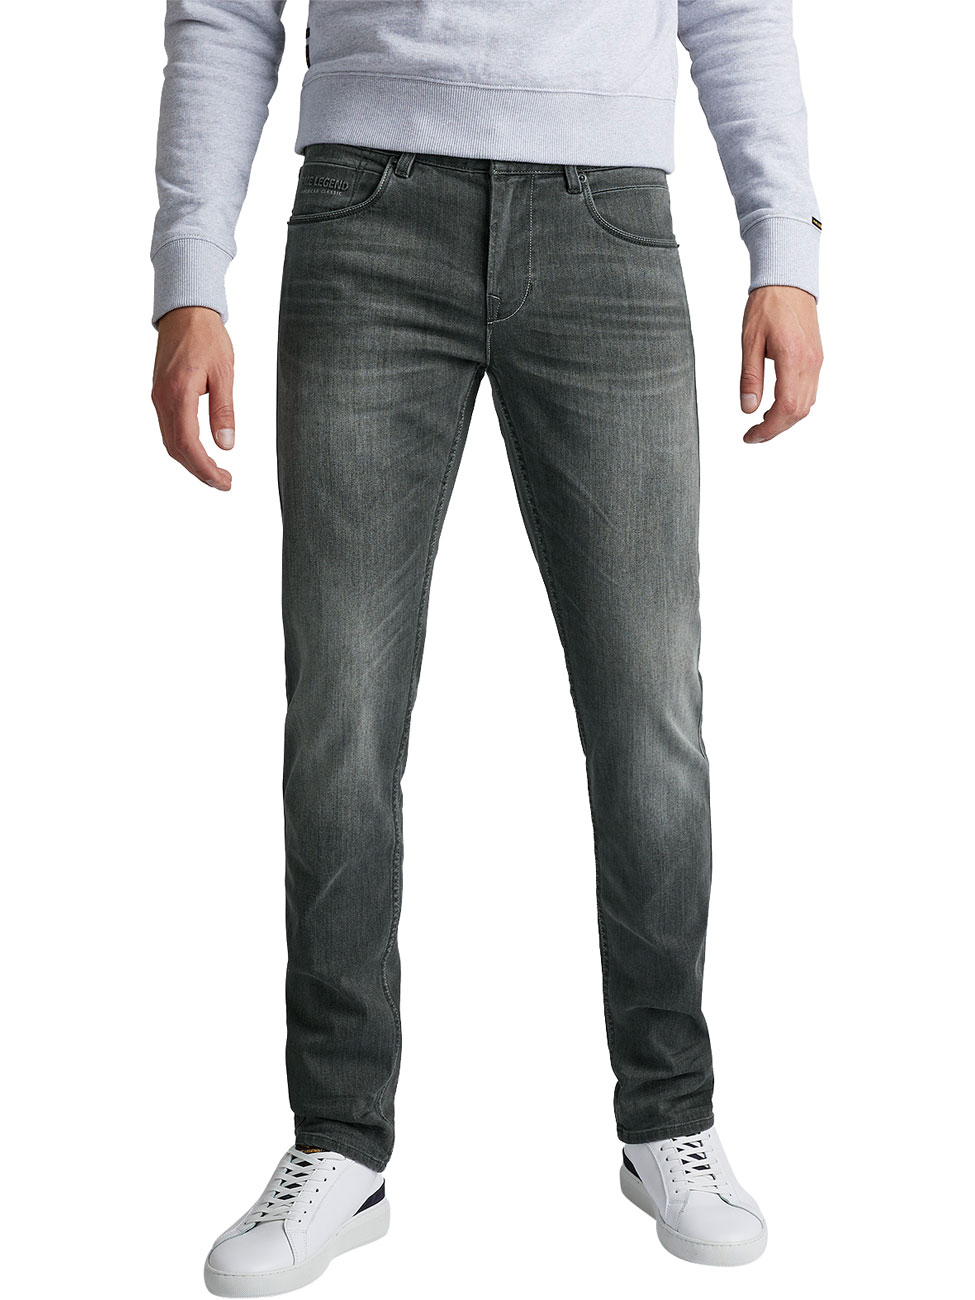 Джинсы PME Legend NIGHTFLIGHT regular/straight, серый джинсы slim fit nightflight stretch pme legend цвет blue